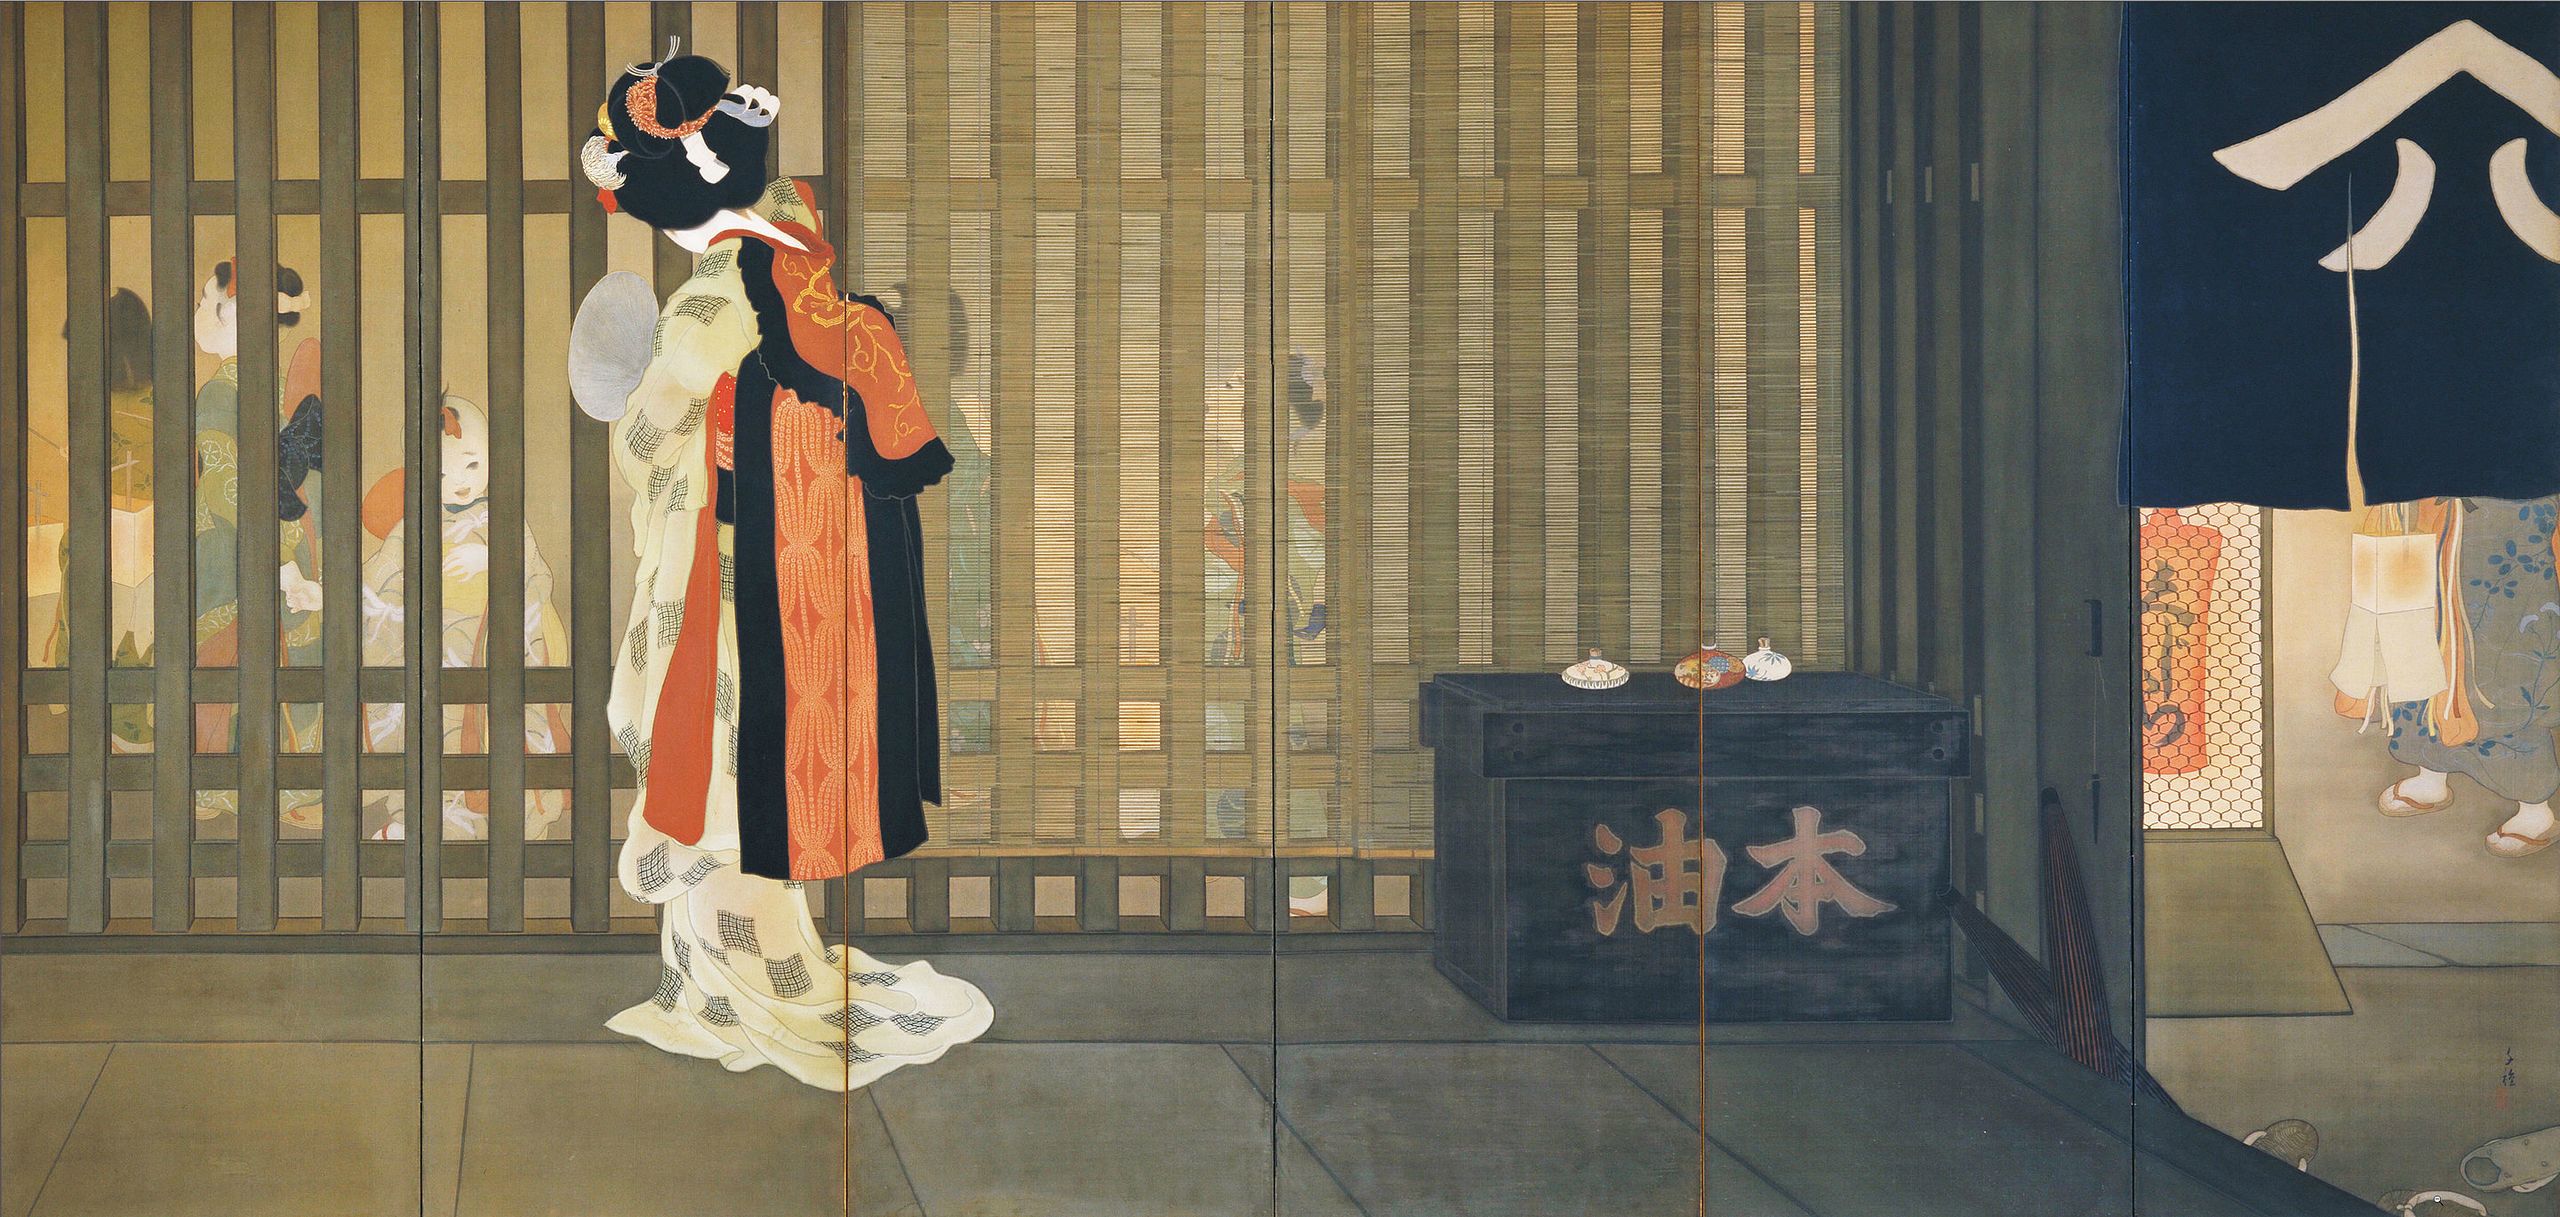 Ongoku by Chigusa Kitani - 1918 - 166 x 342 cm National Museum of Art in Osaka